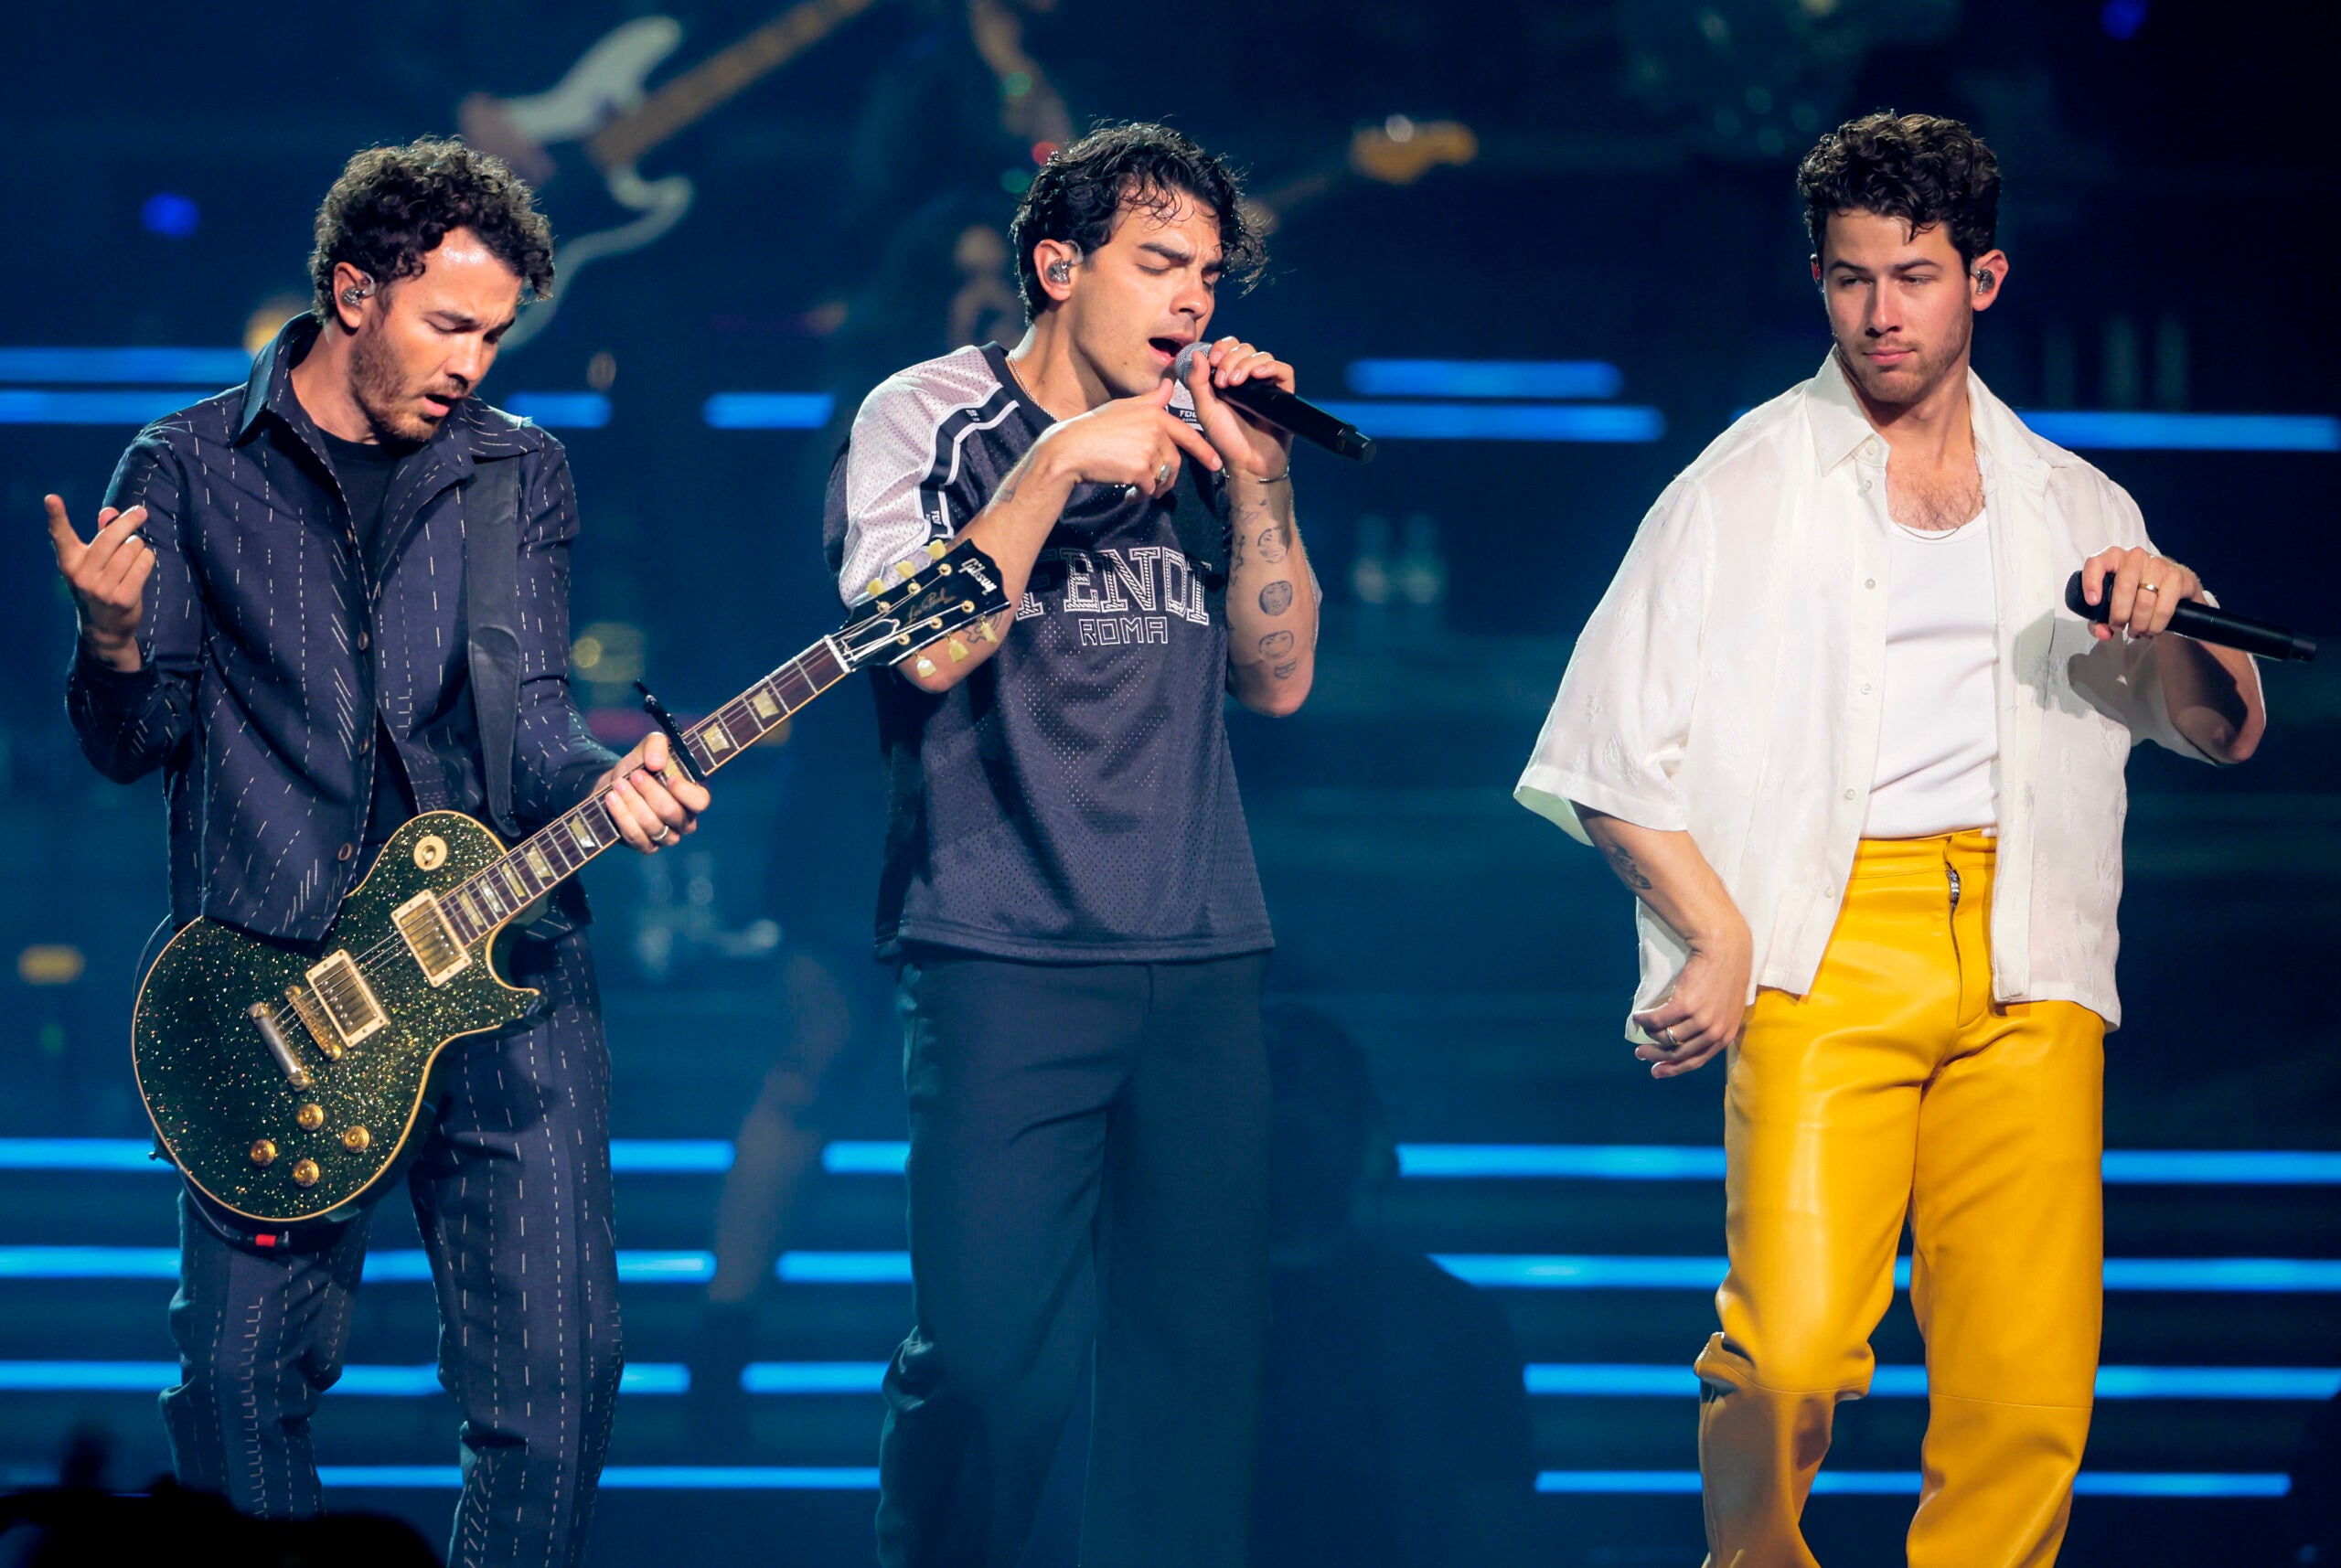 Kevin Jonas, Joe Jonas, and Nick Jonas perform on stage at TD Garden in Boston.